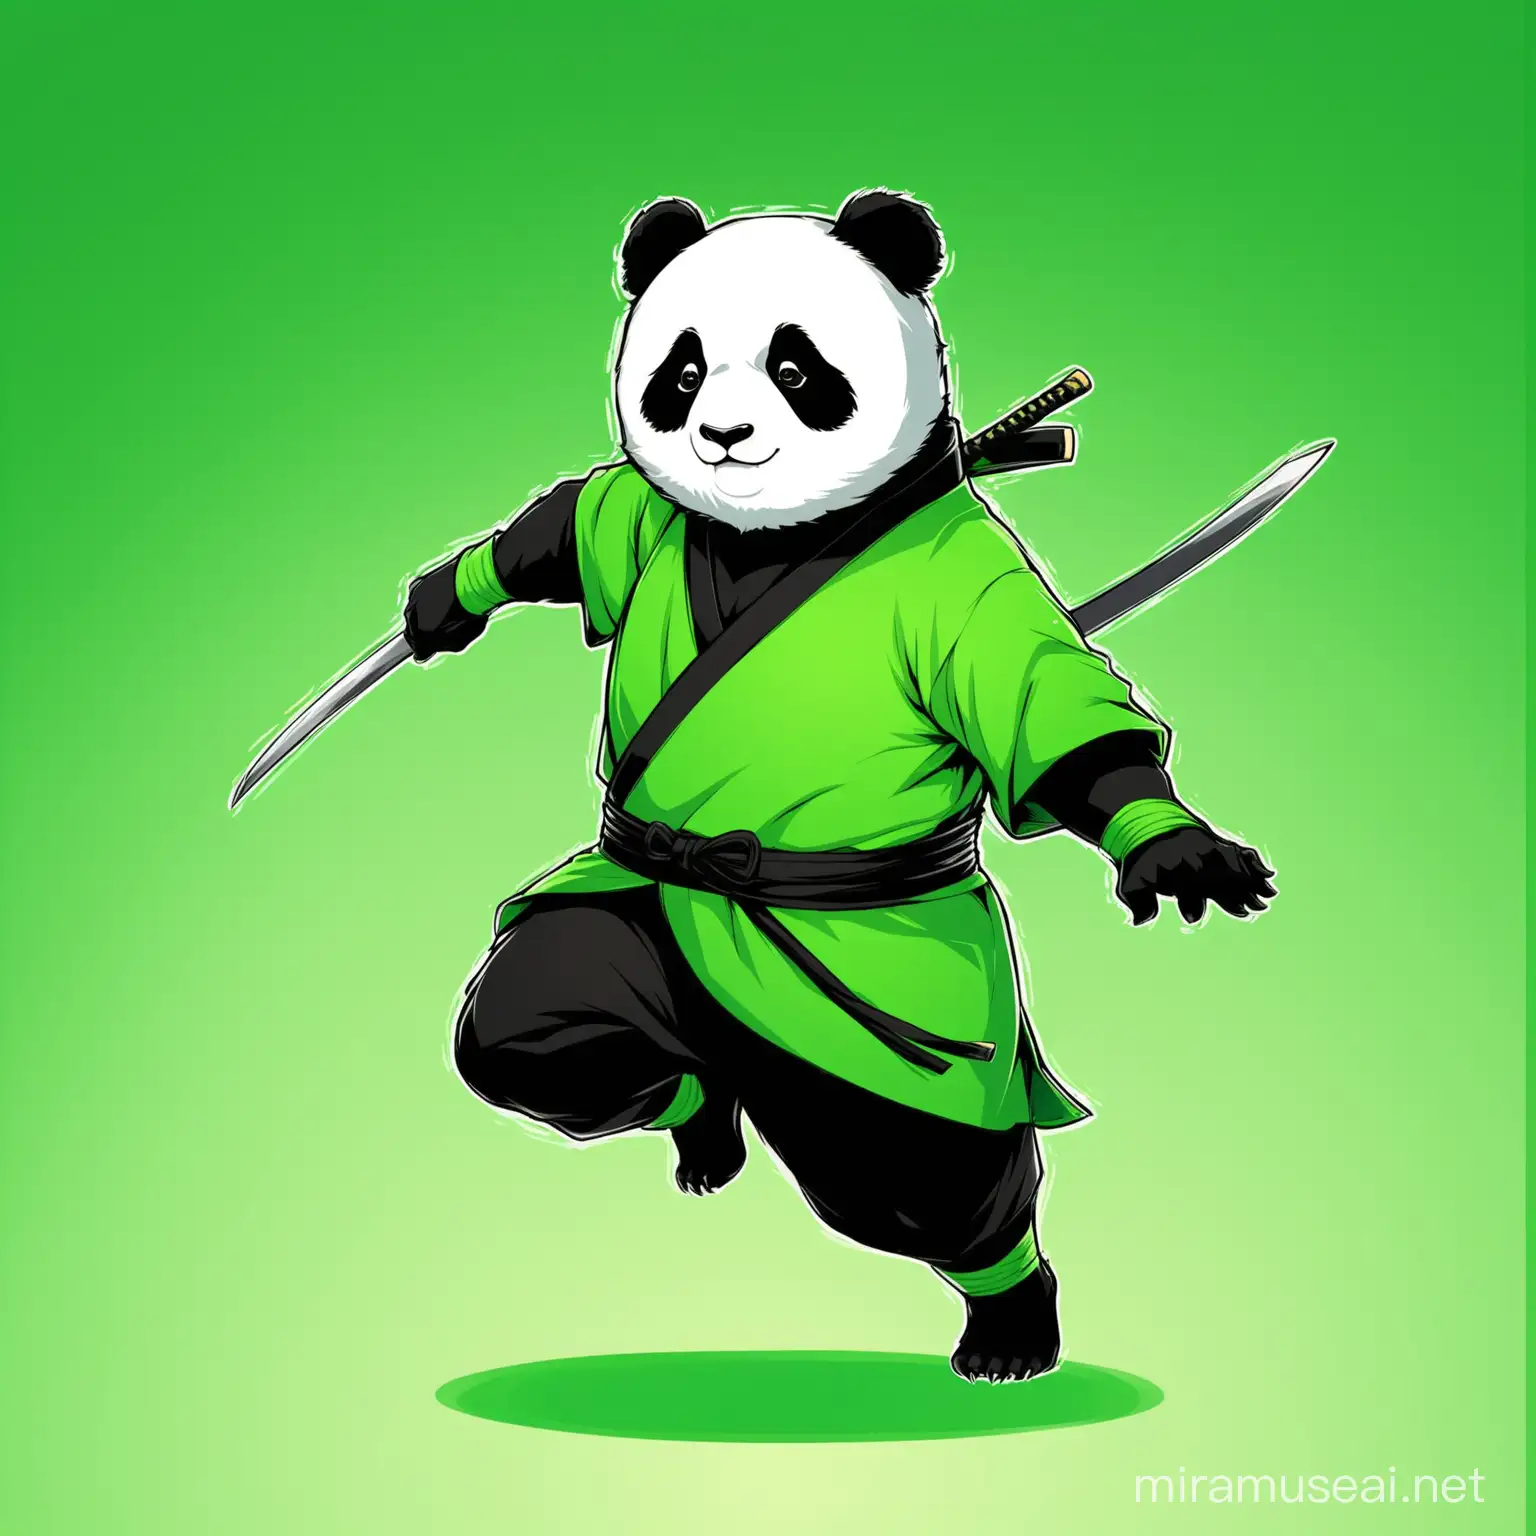 Mystical Panda Ninja in Emerald Green